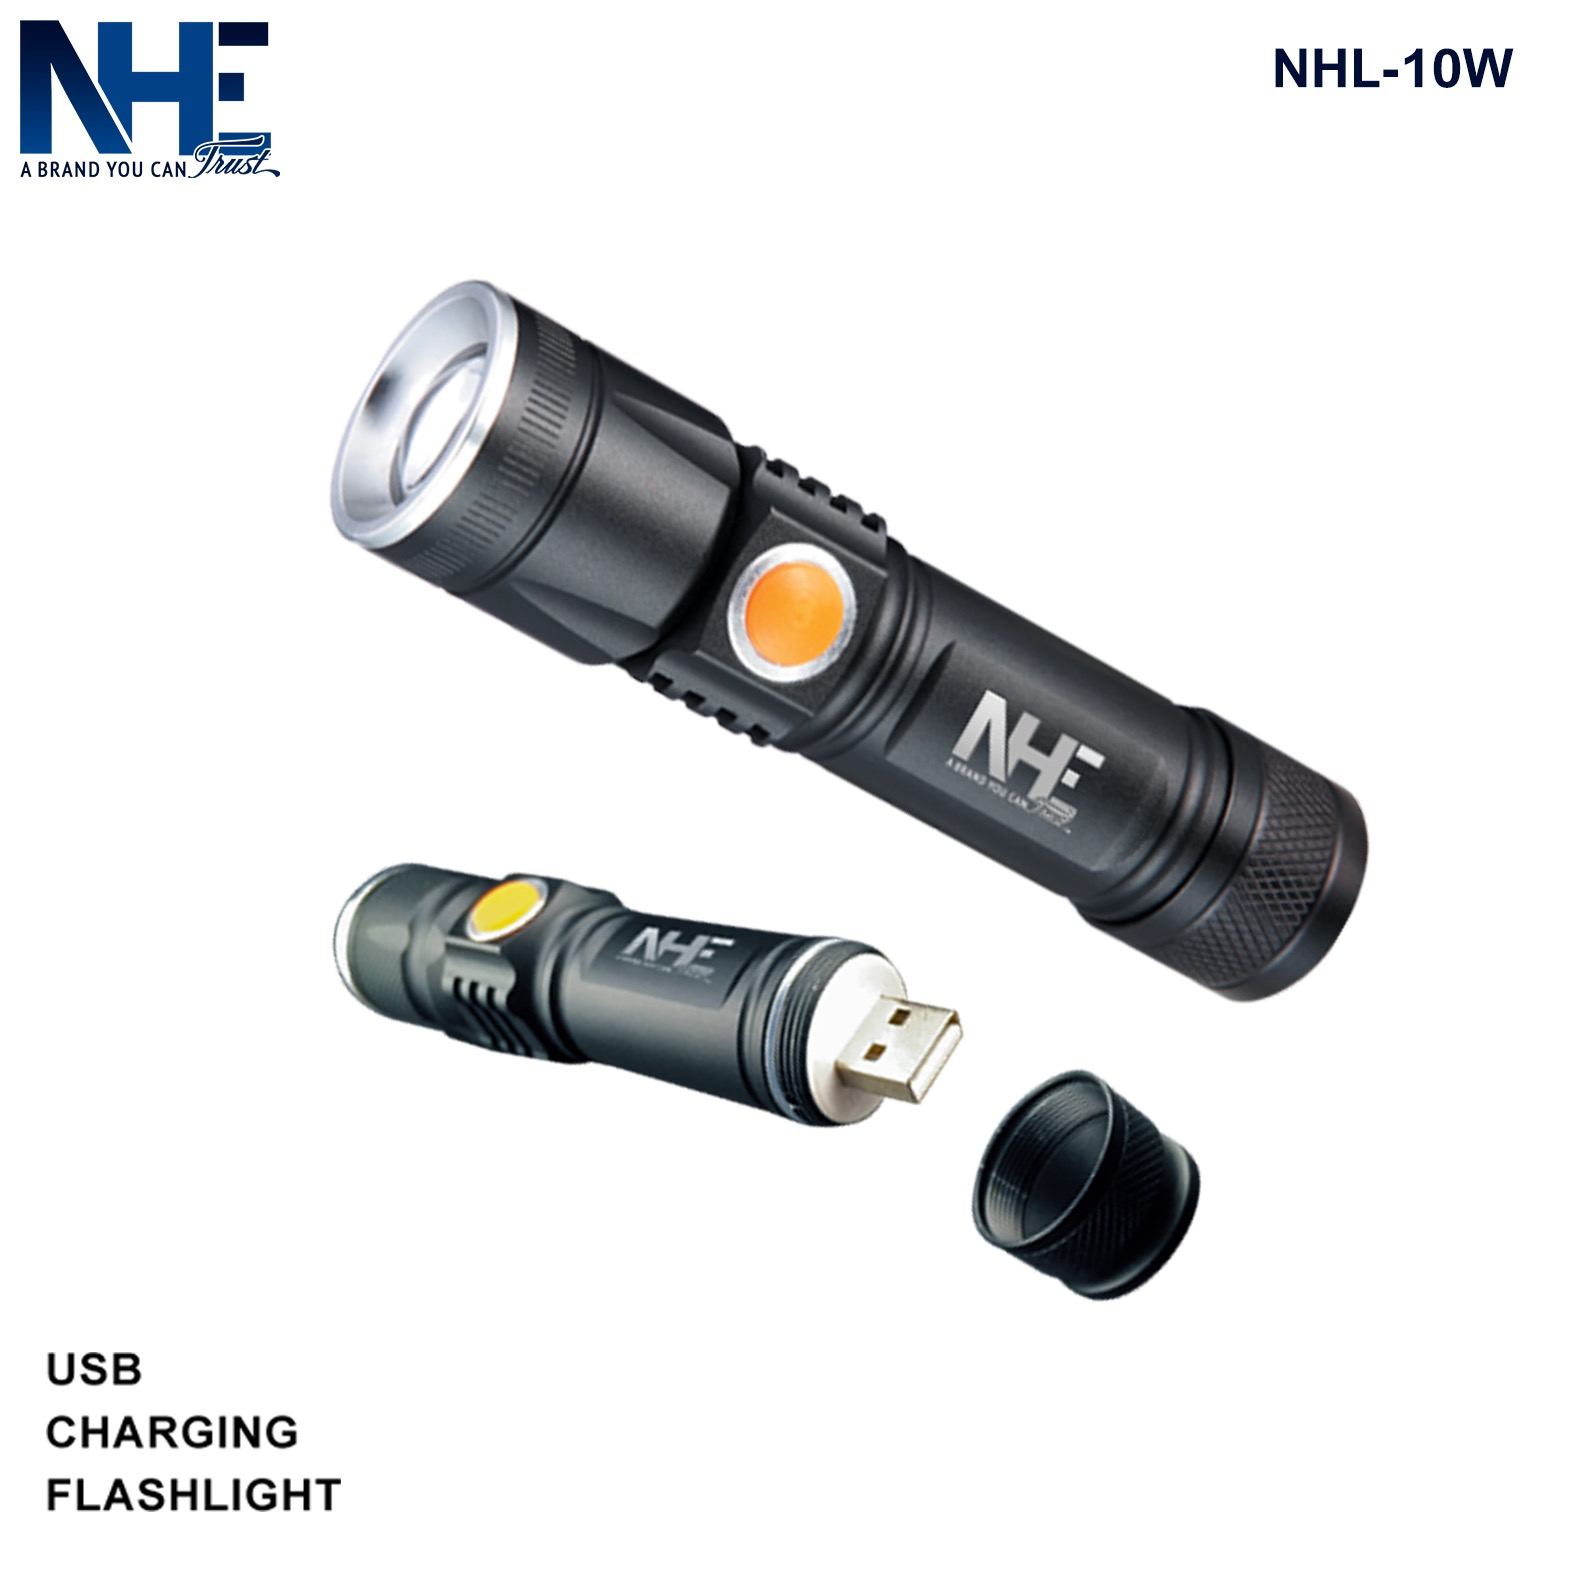 NHE USB Charging Flashlight NHL-10W